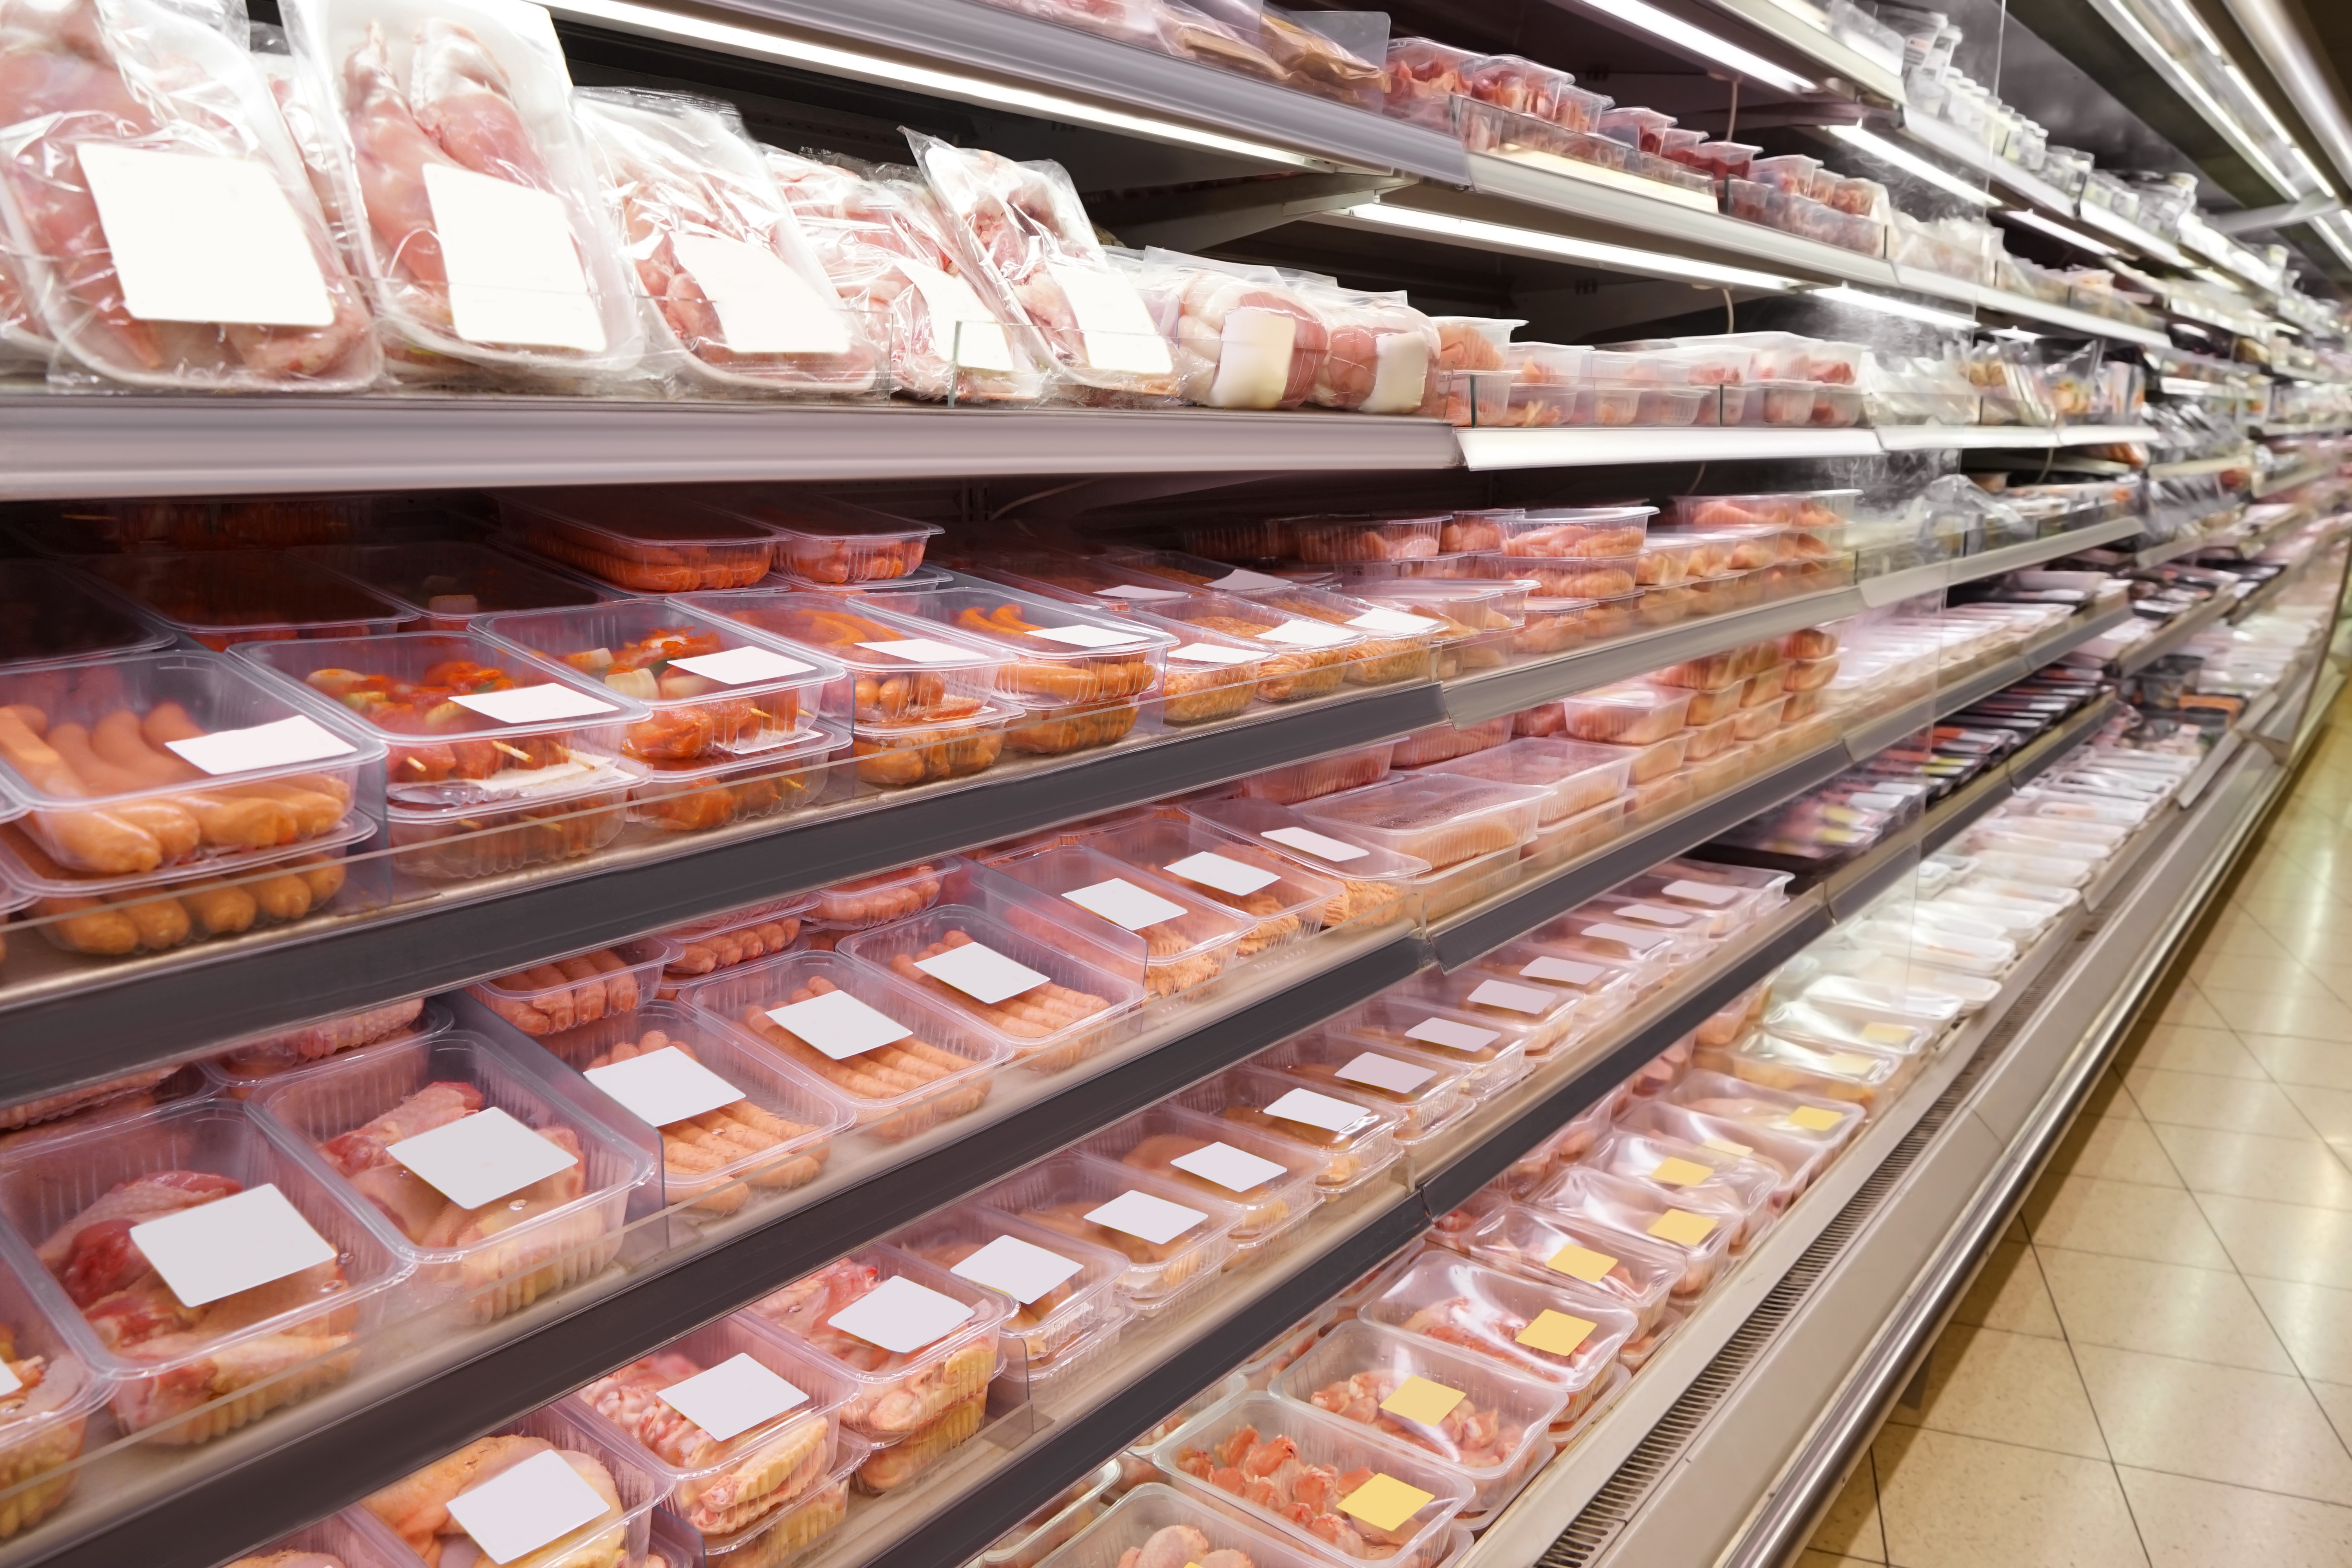 pork in packaging in a supermarket